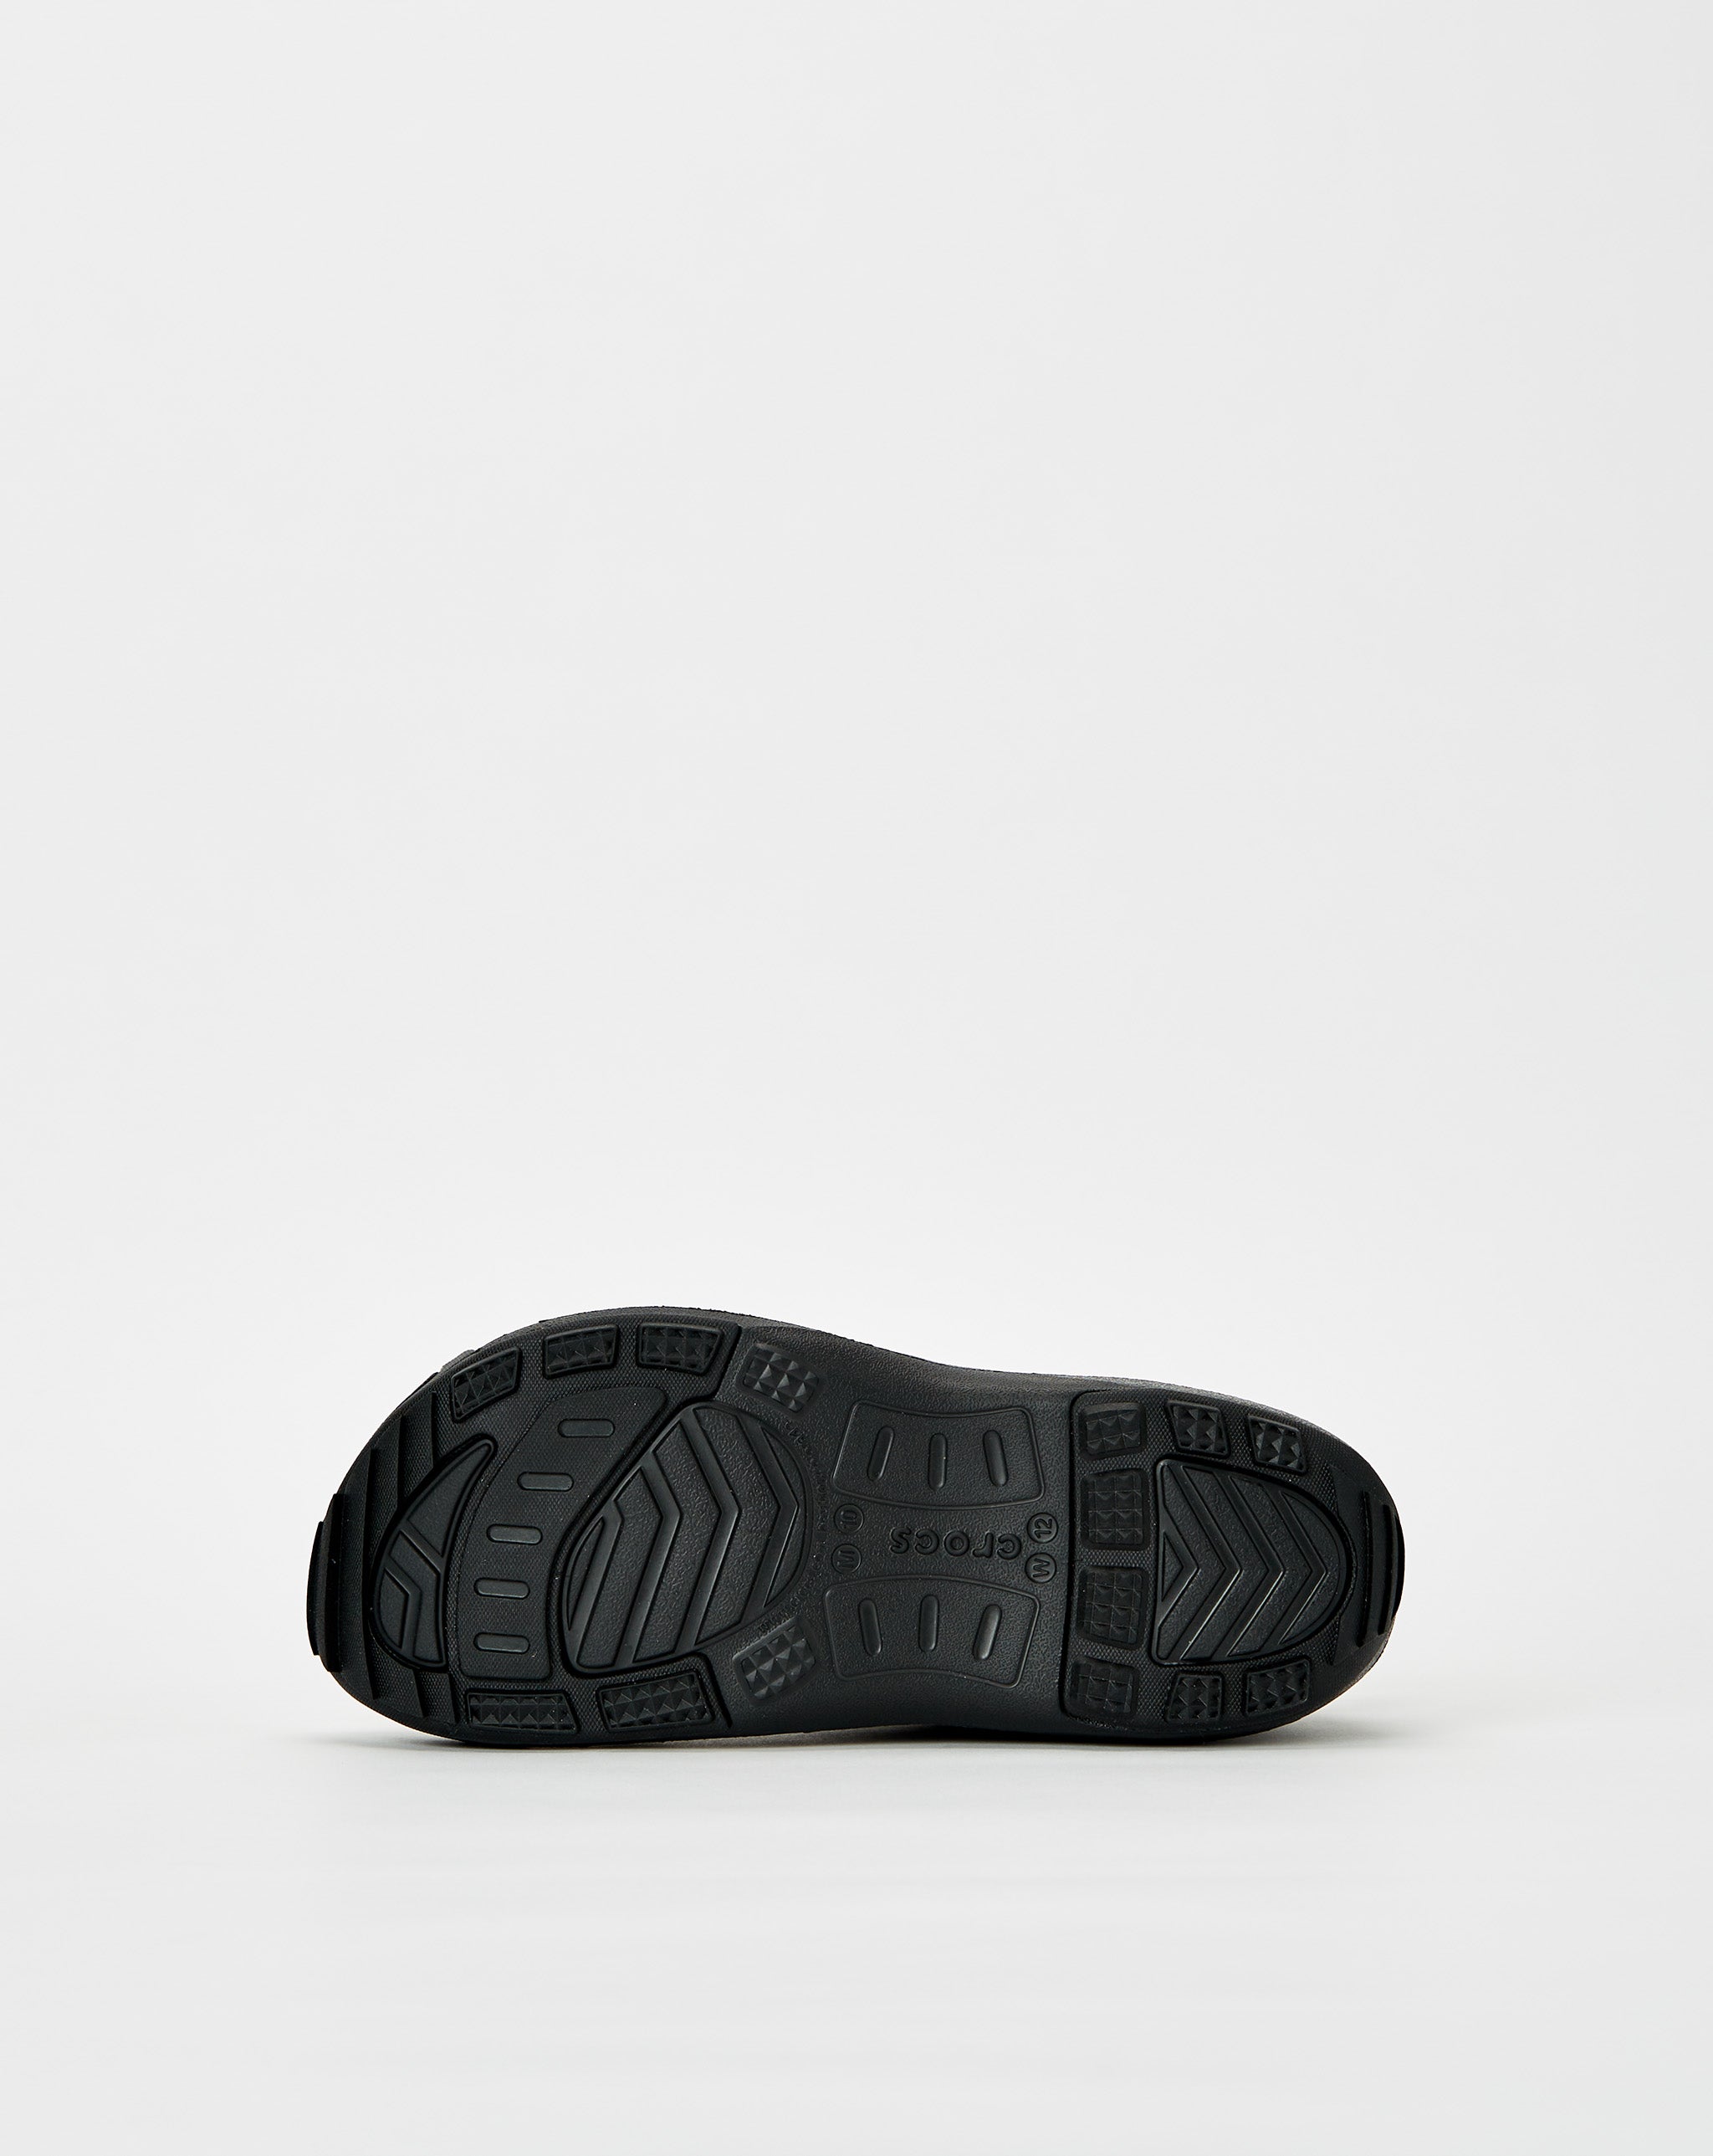 Crocs nike roshe black with white check soccer cleats  - Cheap Erlebniswelt-fliegenfischen Jordan outlet